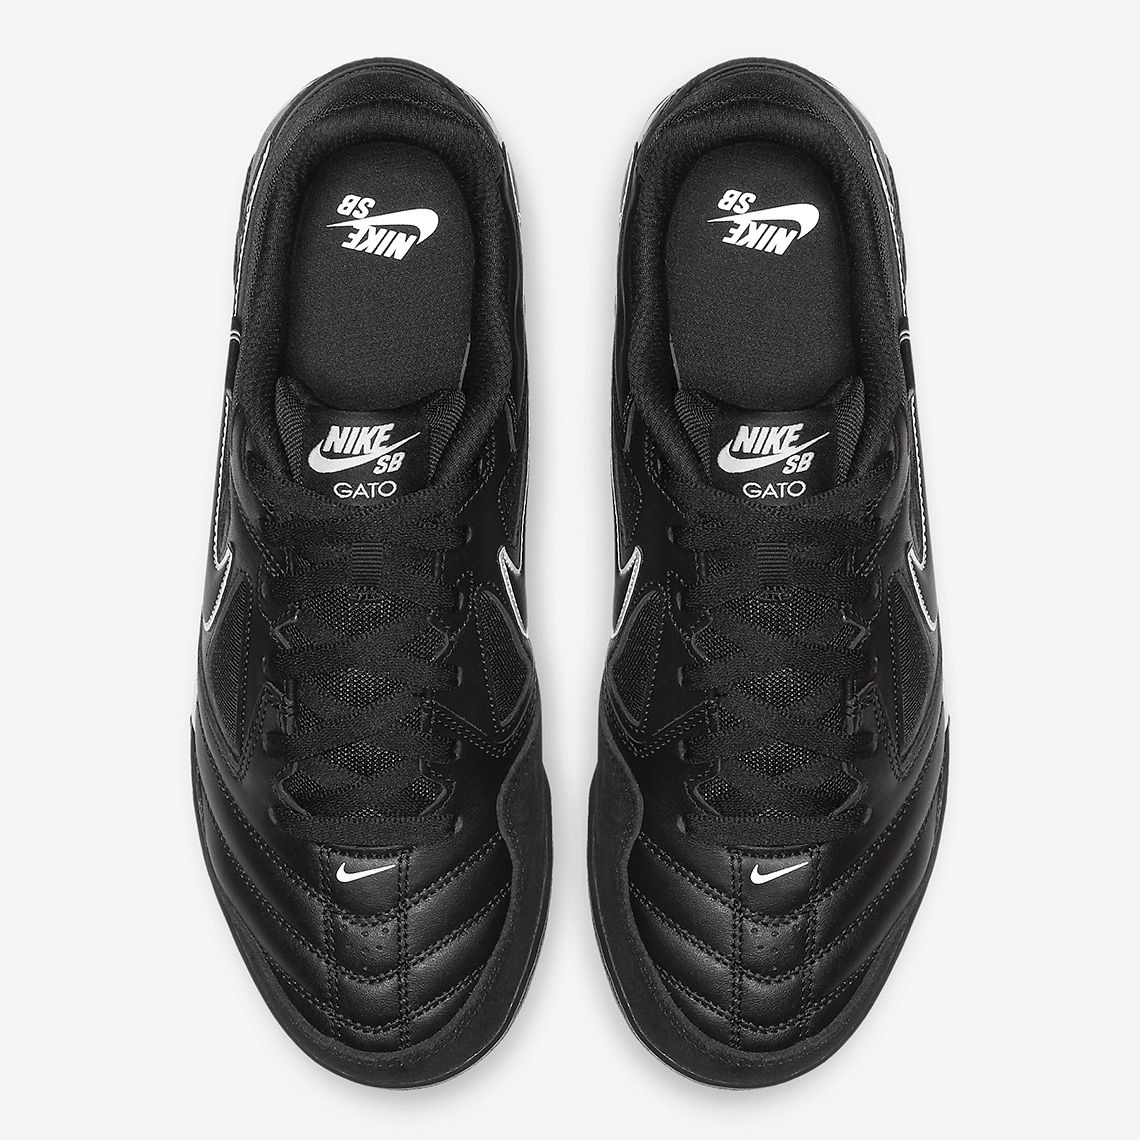 Nike Sb Gato At4607 001 Release Info 6